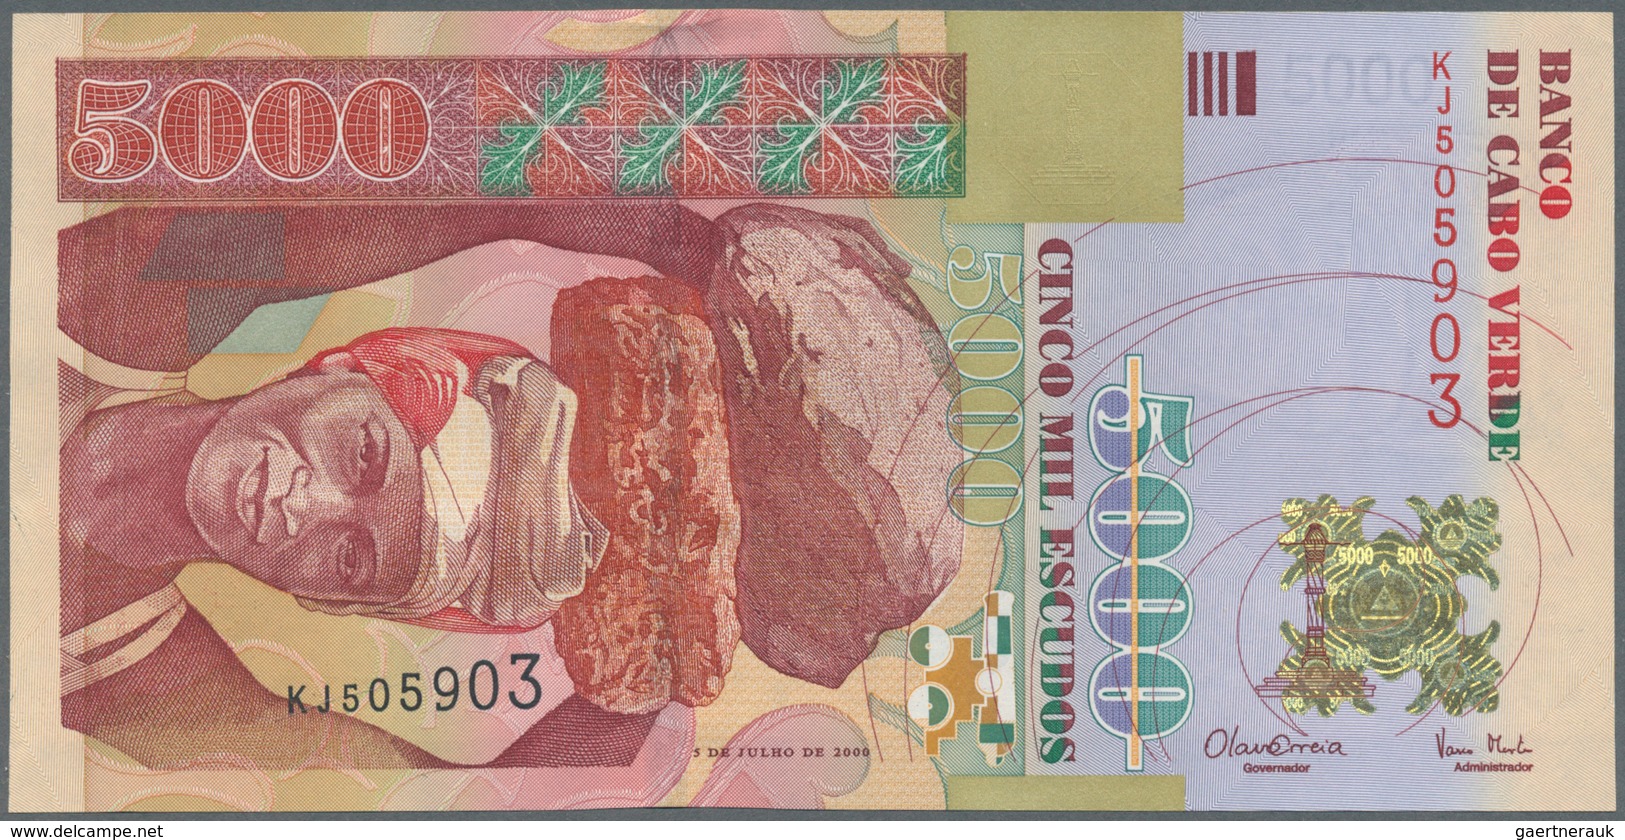 02938 Africa / Afrika: Collectors book with 110 Banknotes from Belgian Congo, Biafra, Botswana, Burundi, C